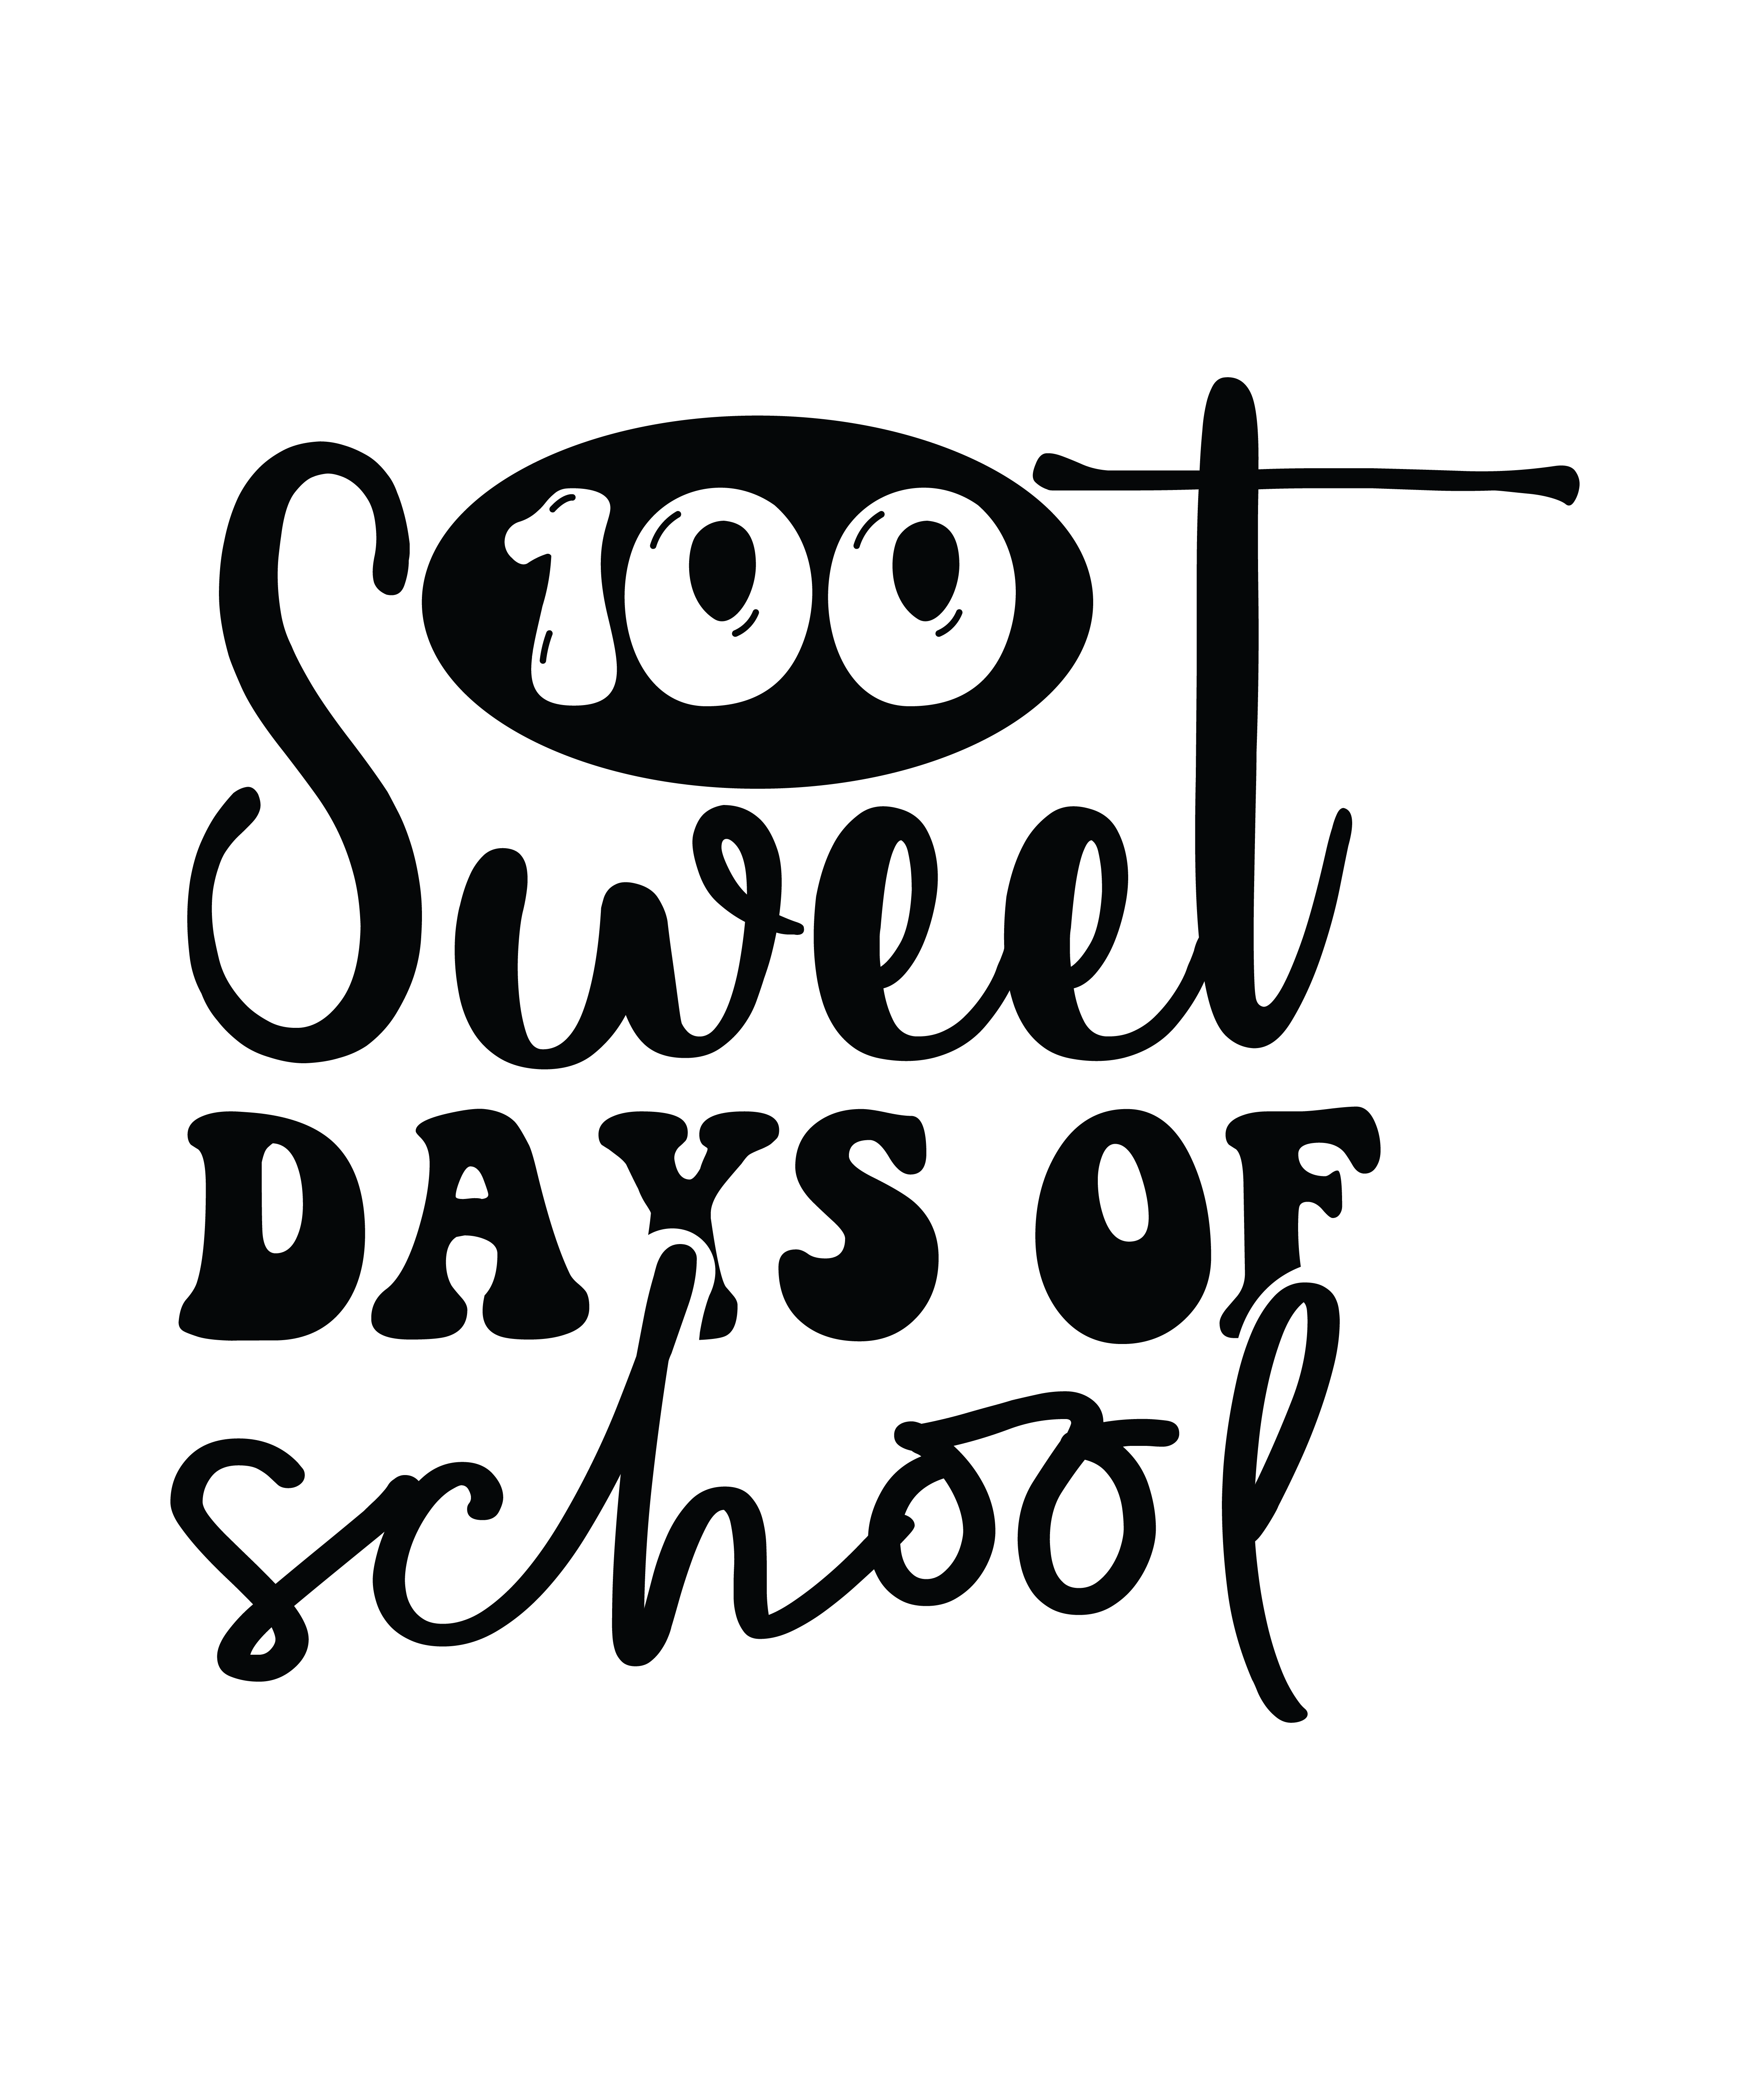 100 sweet days of school 01 926